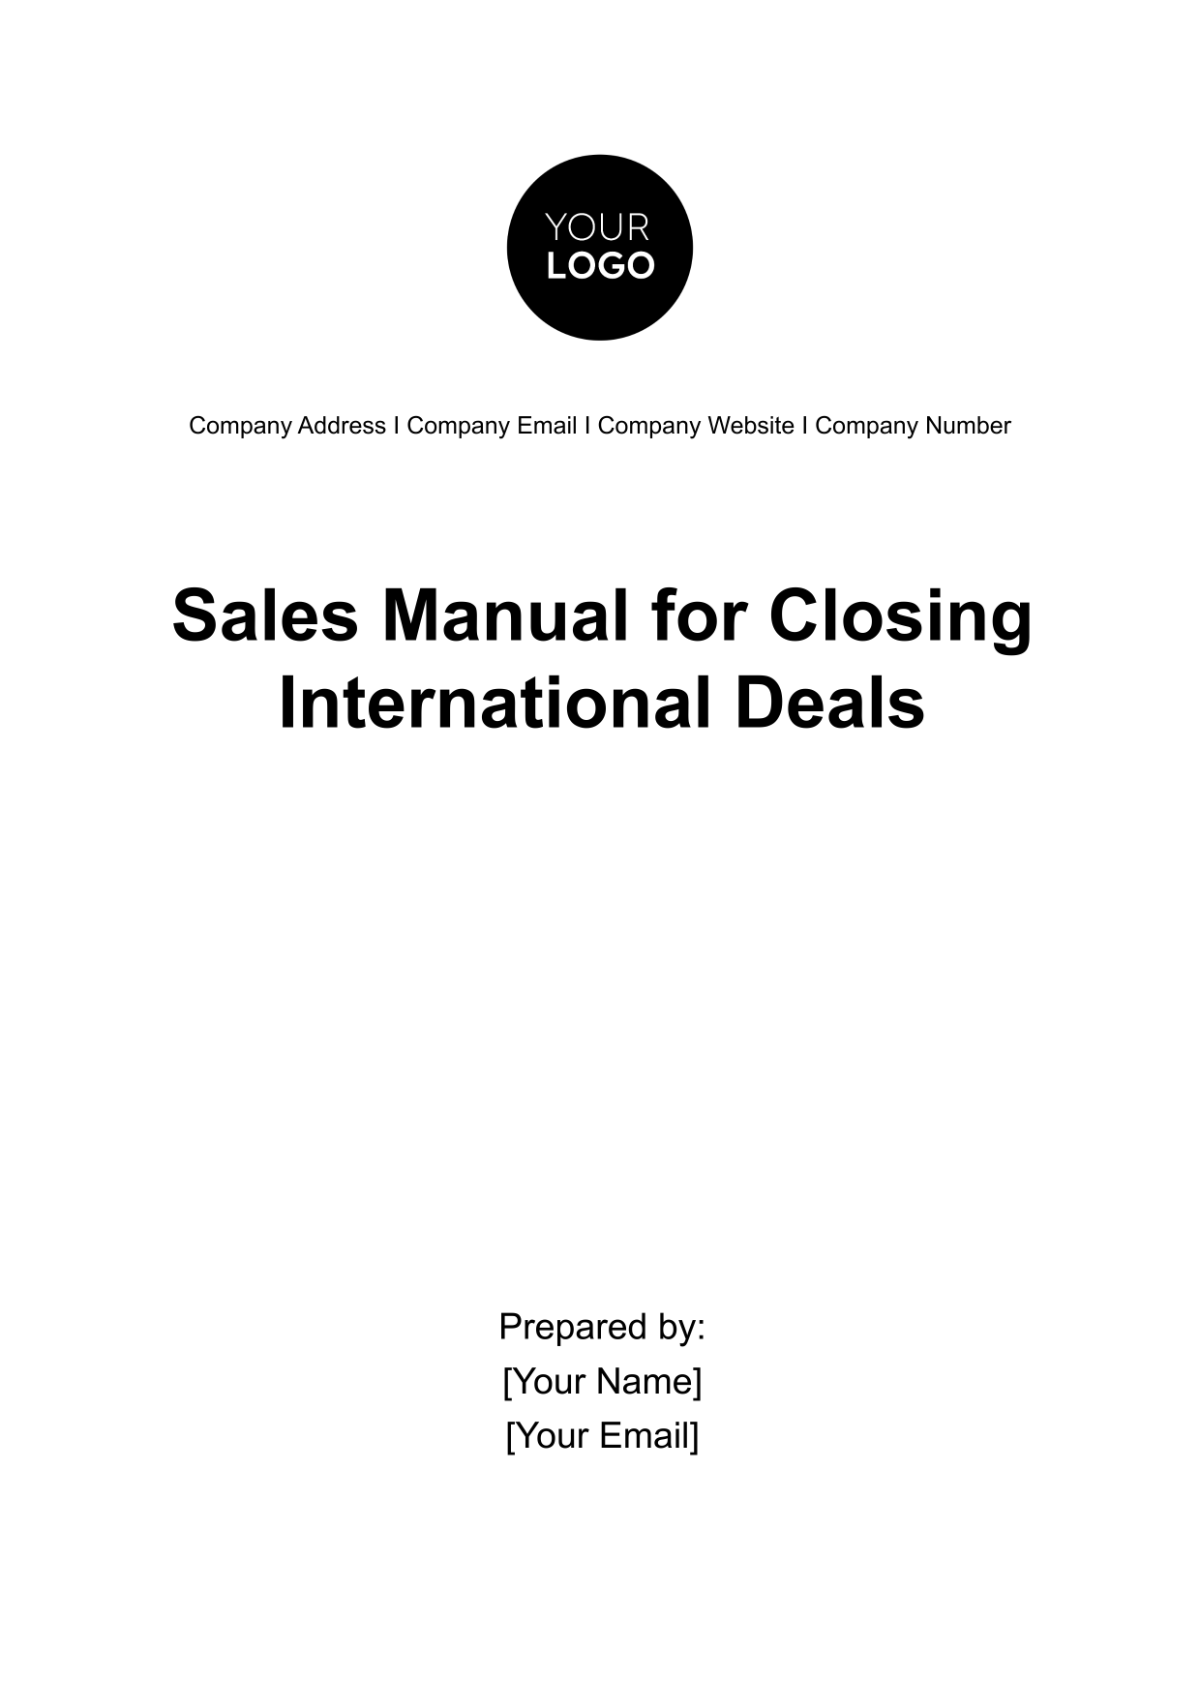 Sales Manual for Closing International Deals Template